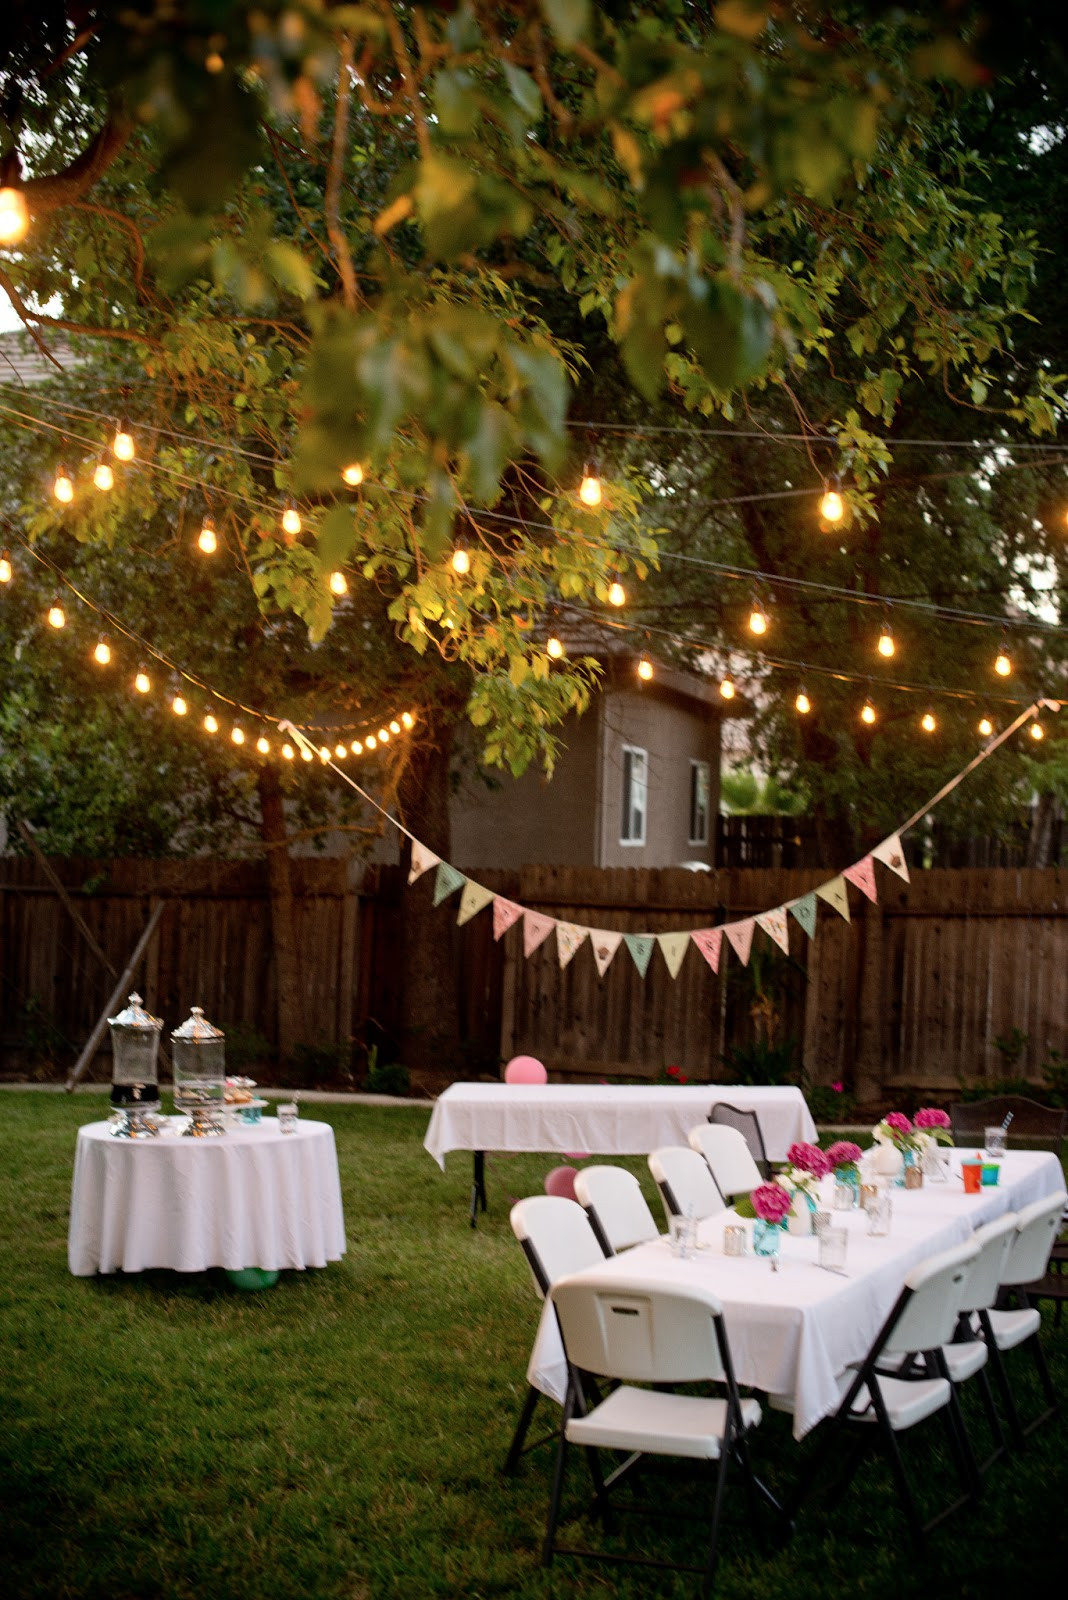 Easy Backyard Party Ideas
 Domestic Fashionista Backyard Birthday Fun Pink